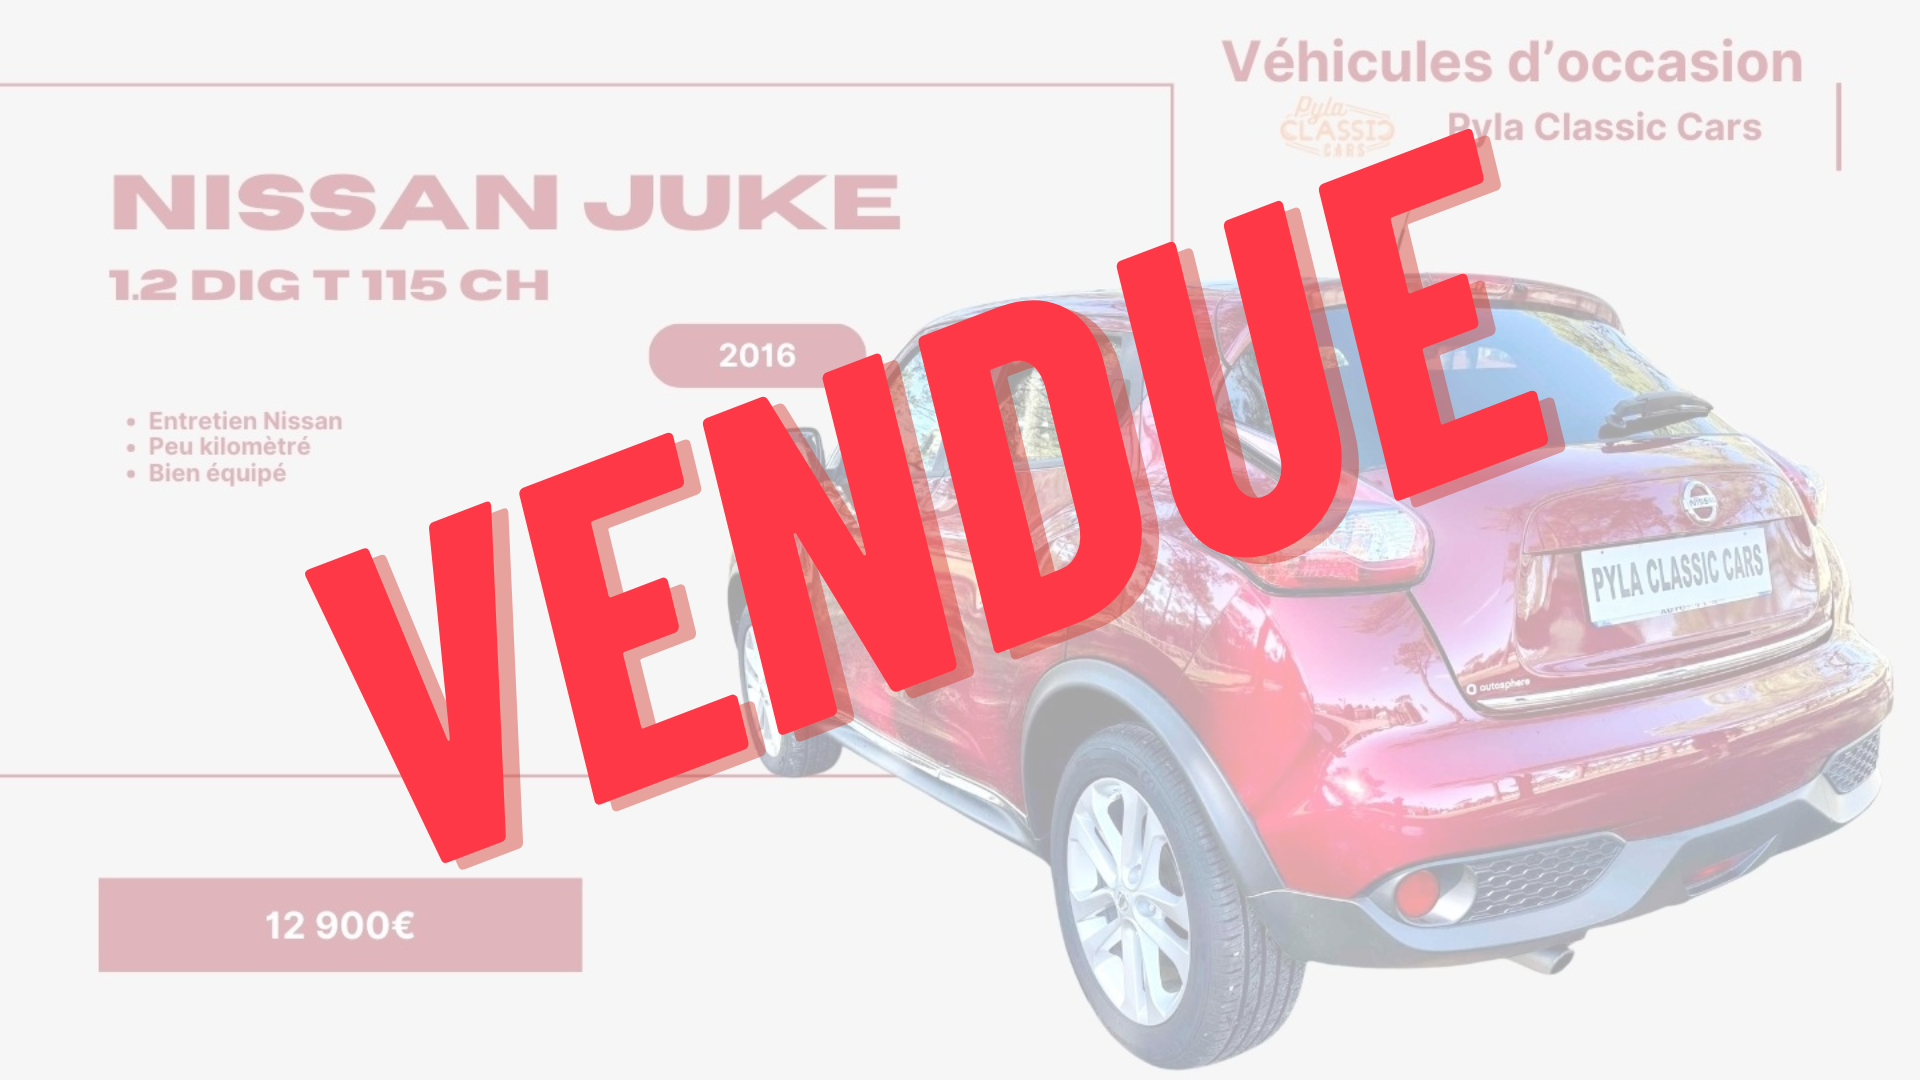 À vendre Nissan Juke 1.2 DIG T 115 ch